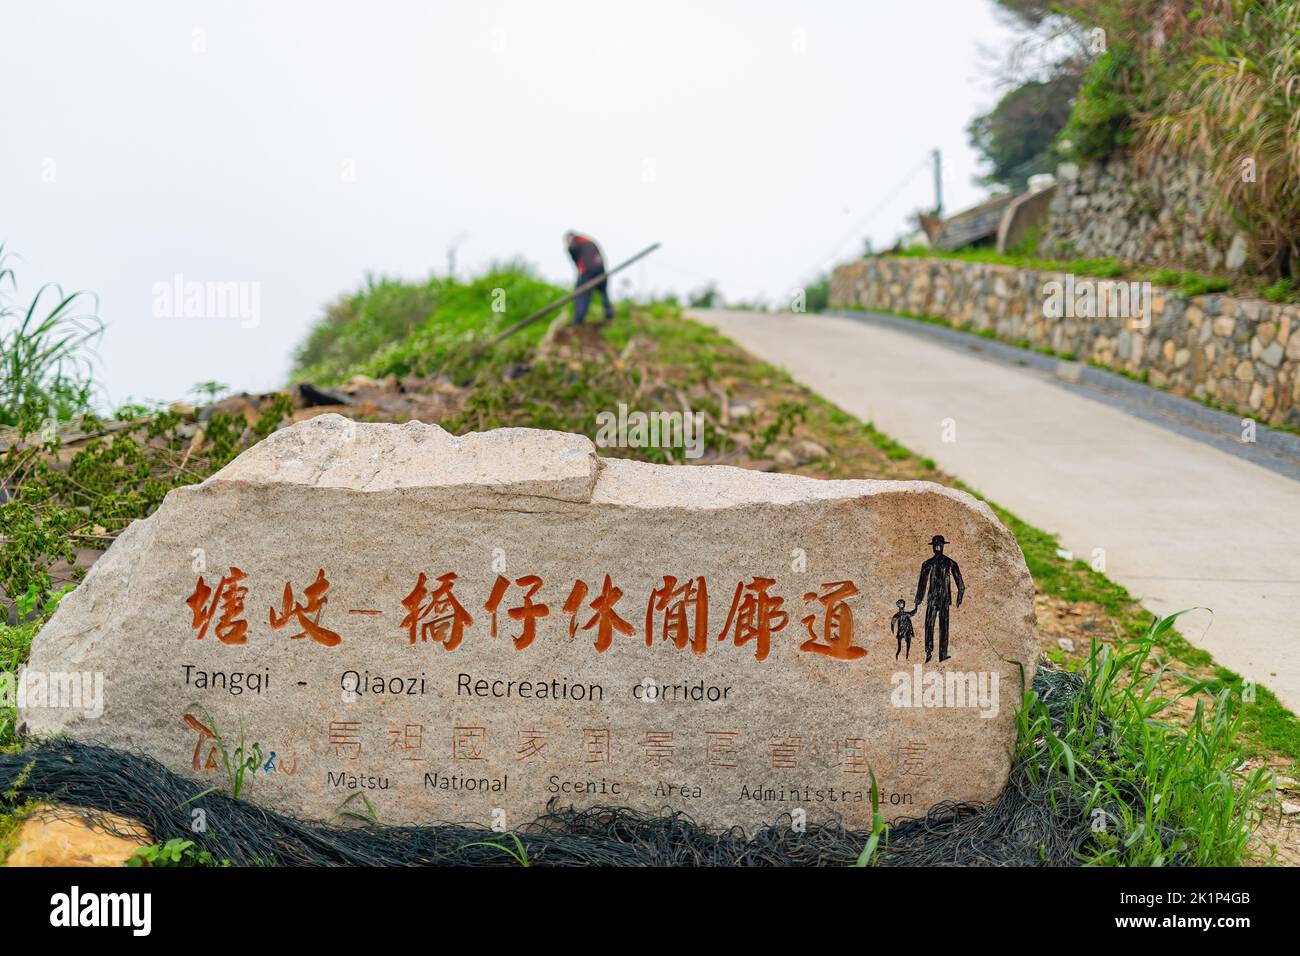 Matsu, MAY 3 2014 - Entrance of the Tangqi Qiaozi Recreation Corridor Stock Photo